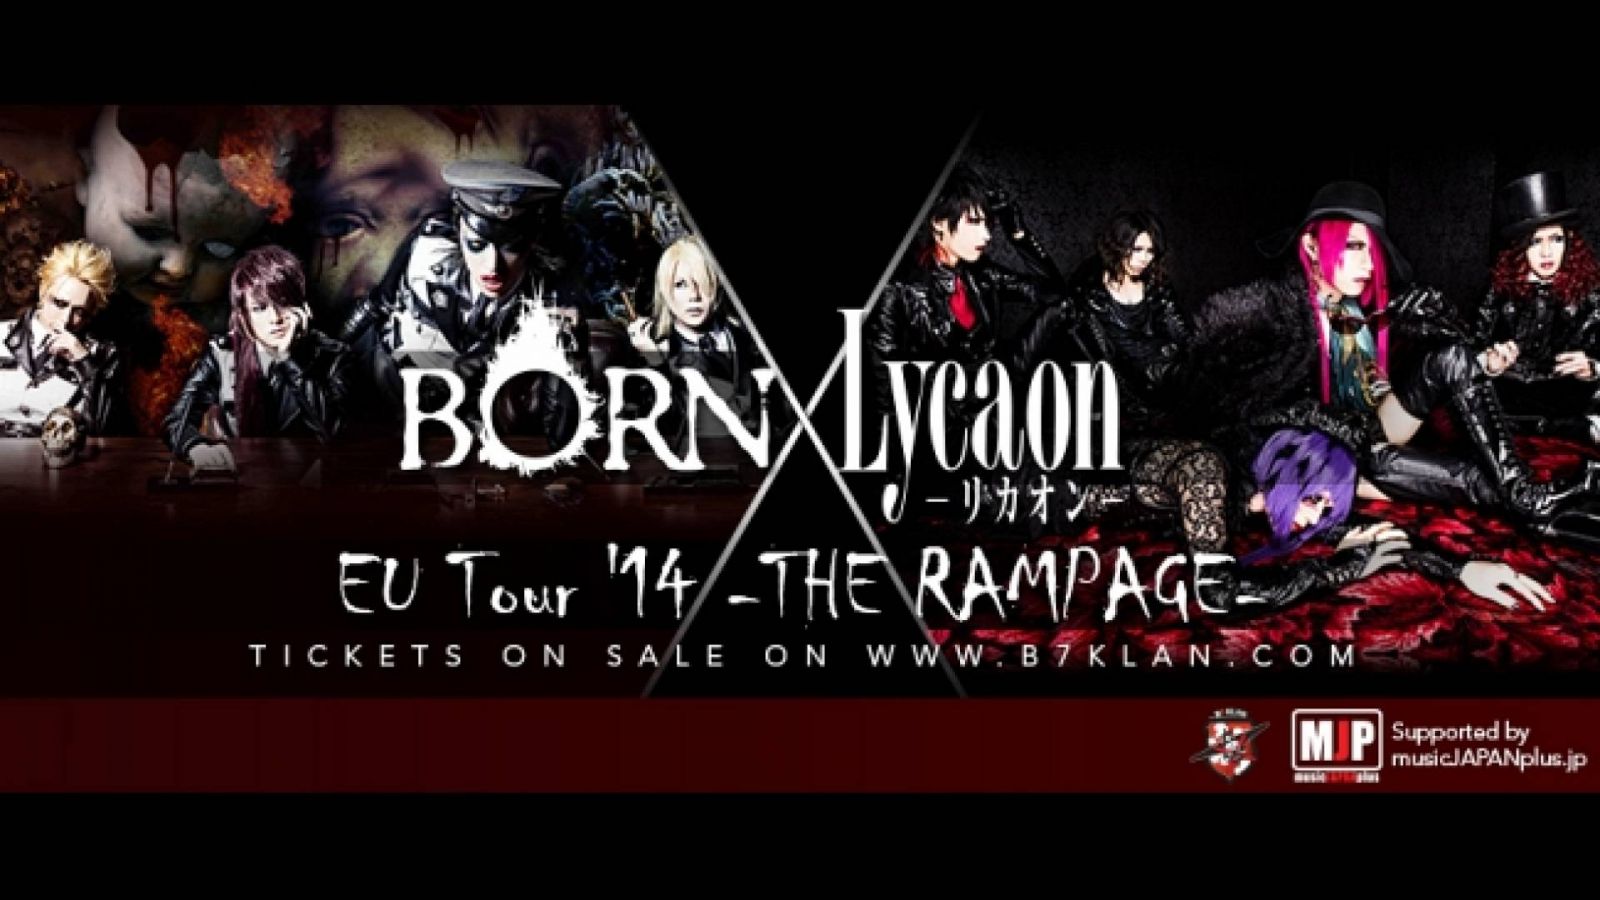 BORN x Lycaon gemeinsam auf EU-Tour © All Rights Reserved.